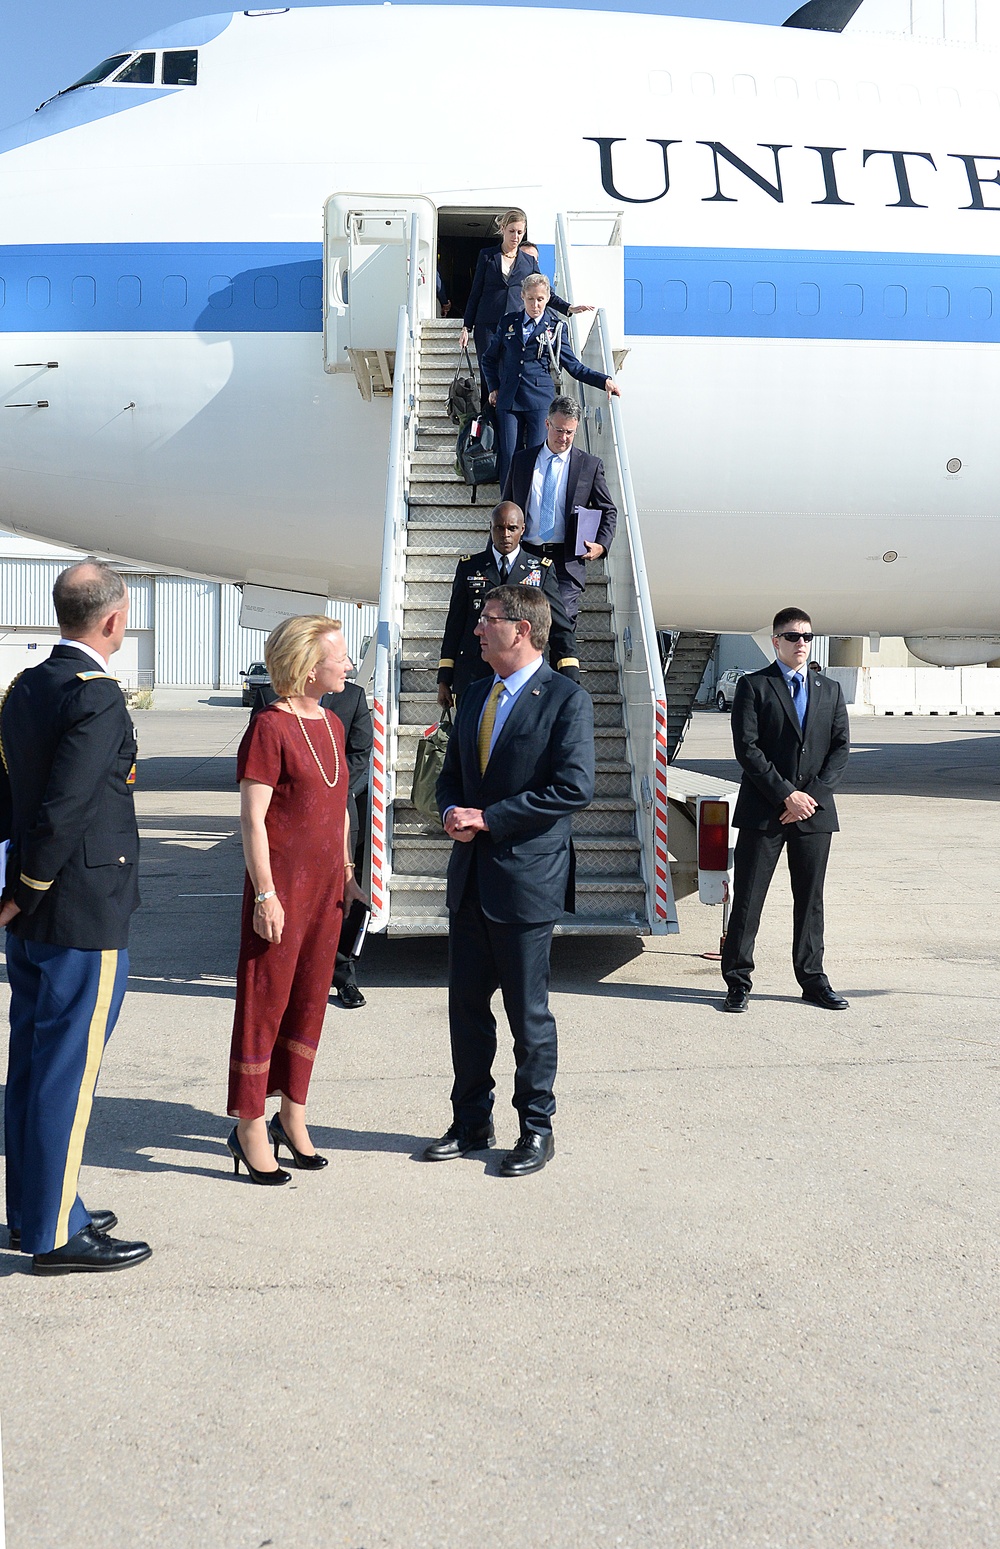 Secretary of defense arrives in Amman, Jordan